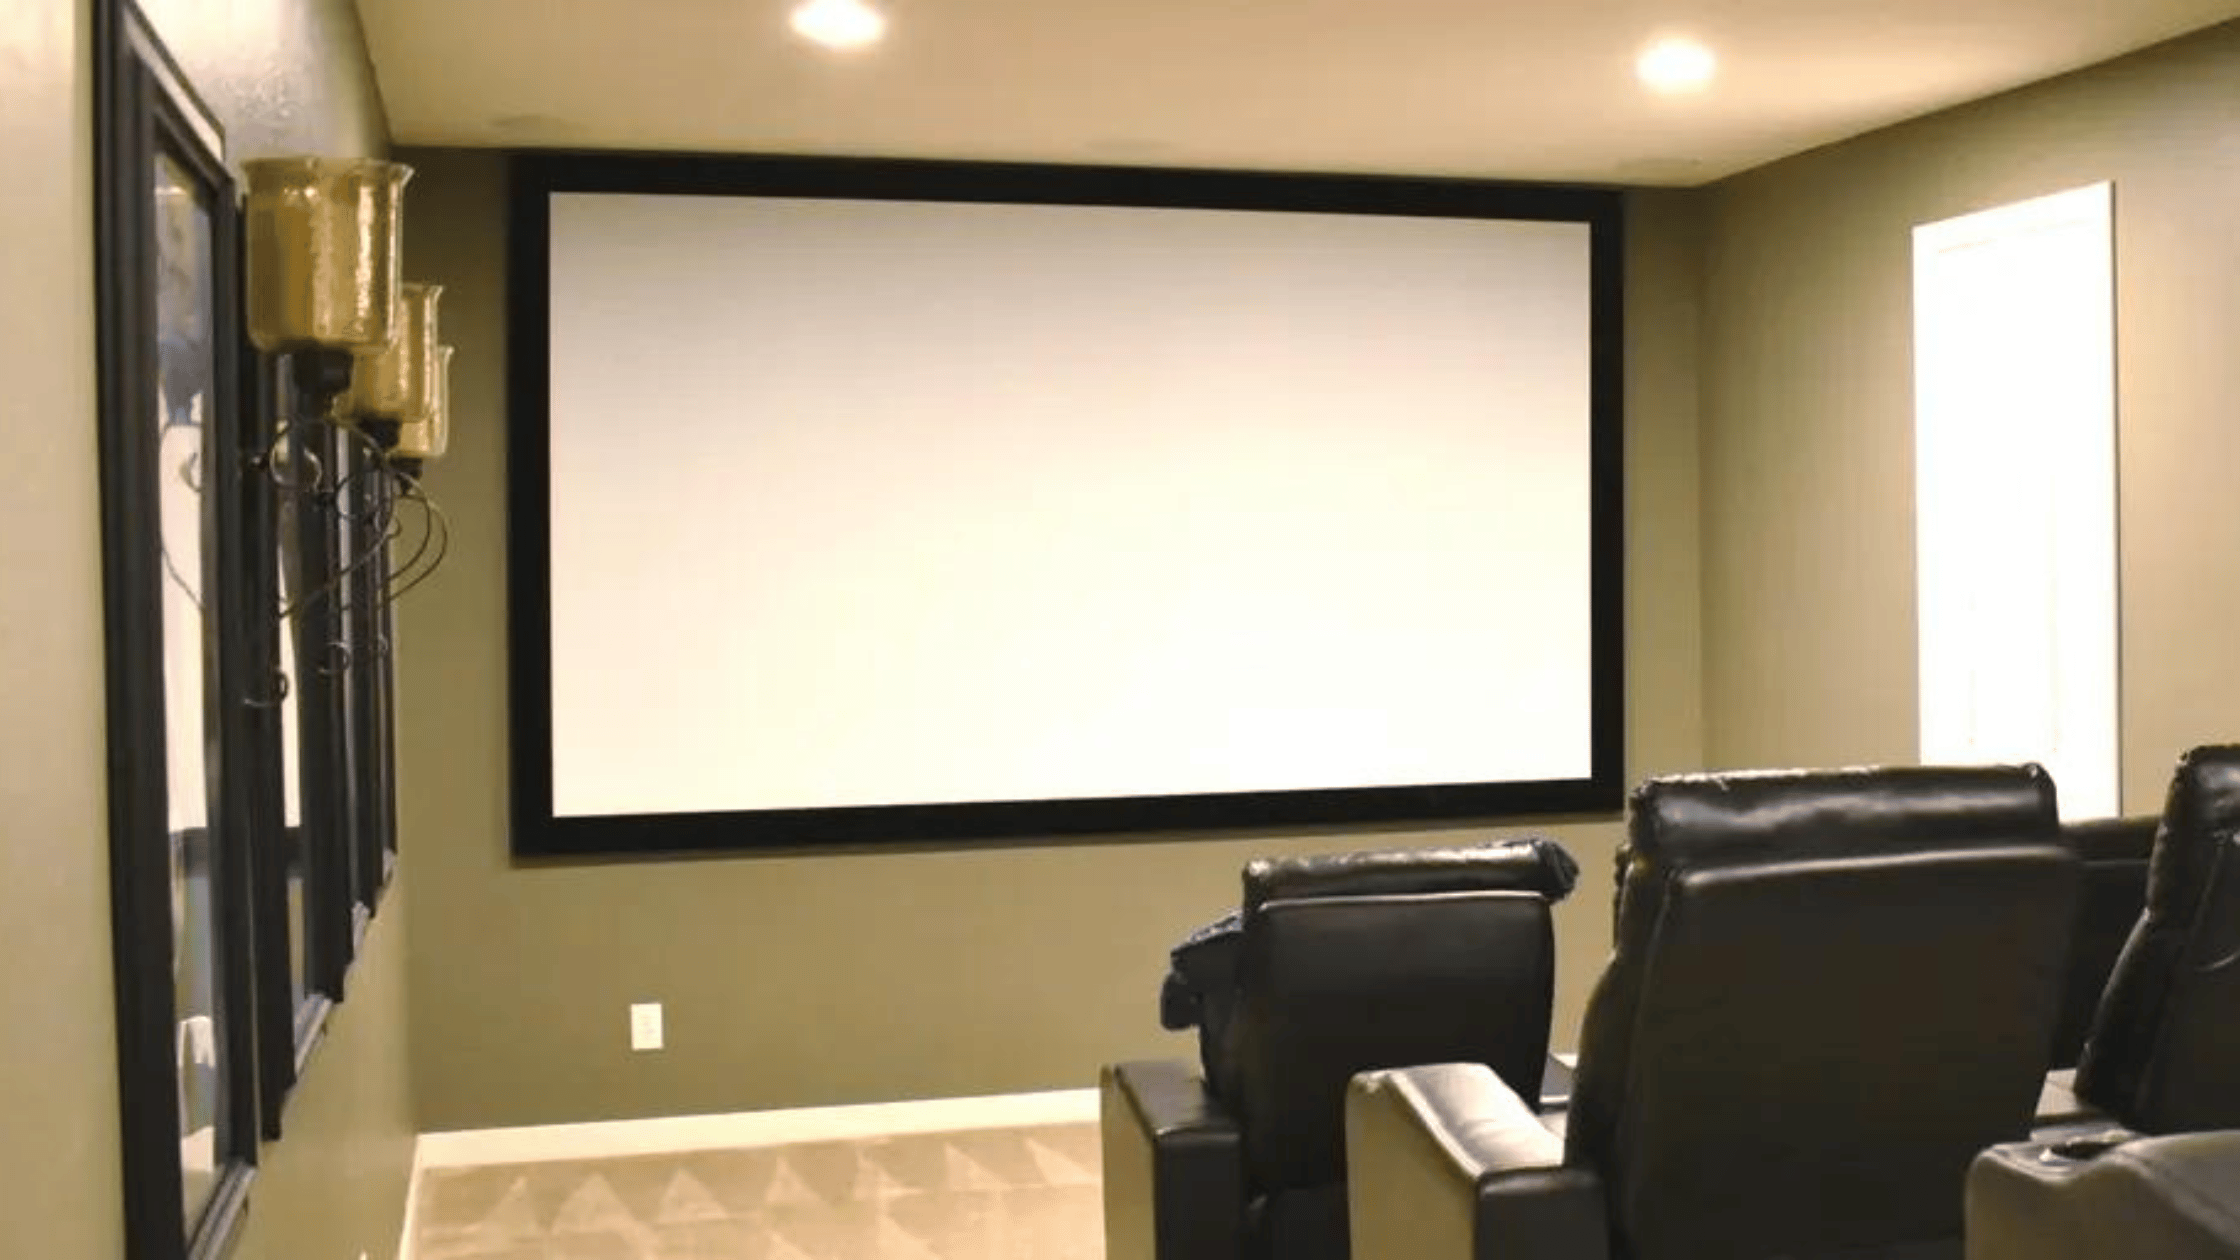 projector-screen